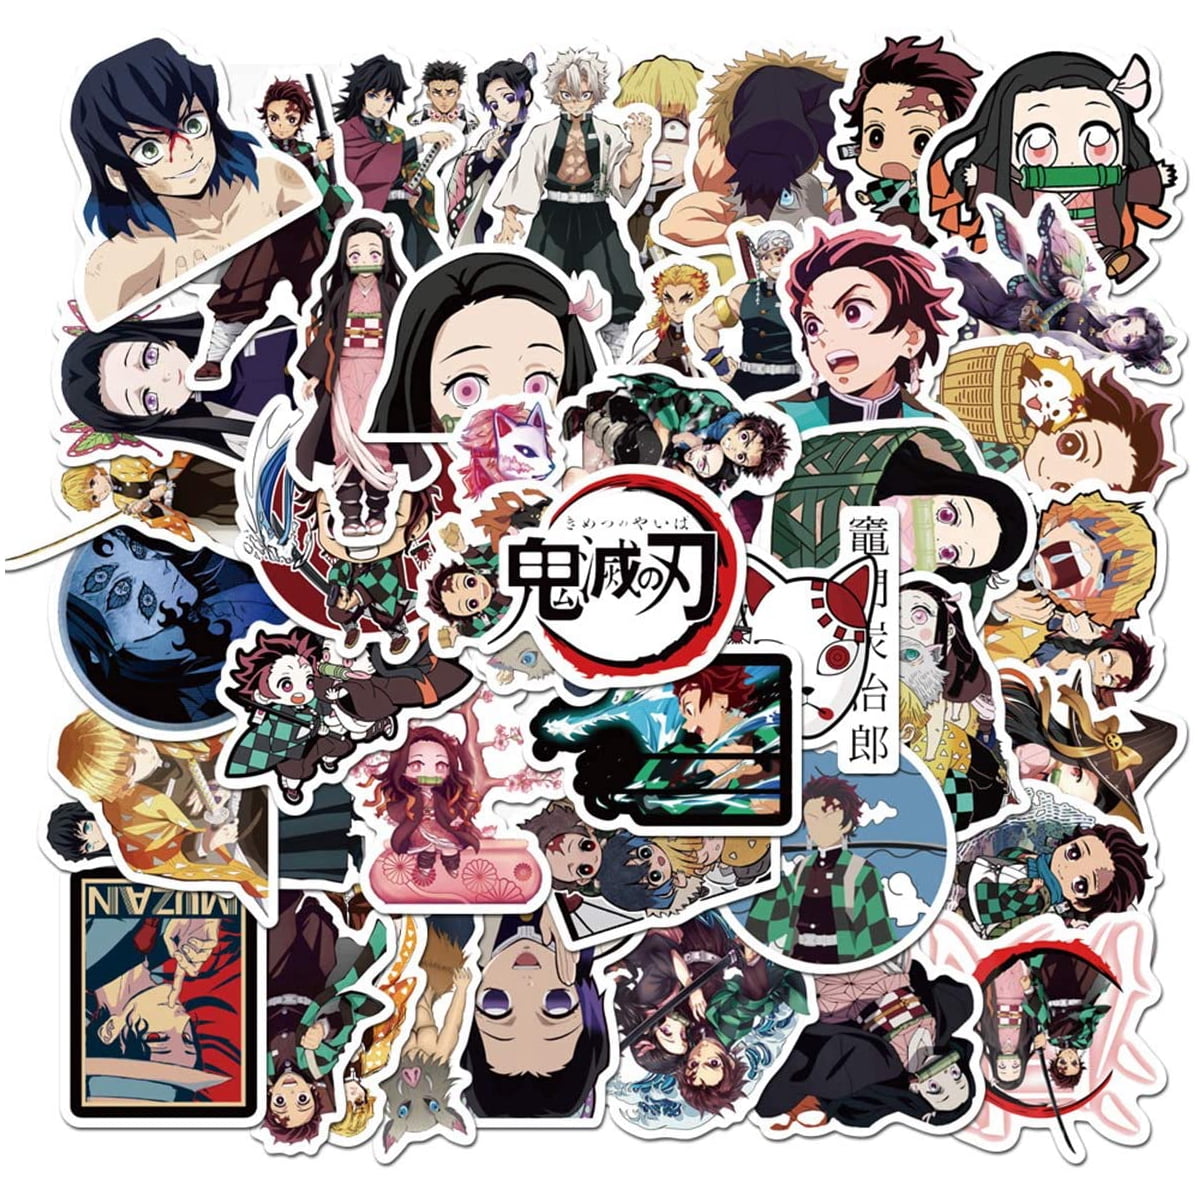 50 Anime Demon Slayer Kimetsu no Yaiba Cartoon Stickers for Luggage Laptop Decal